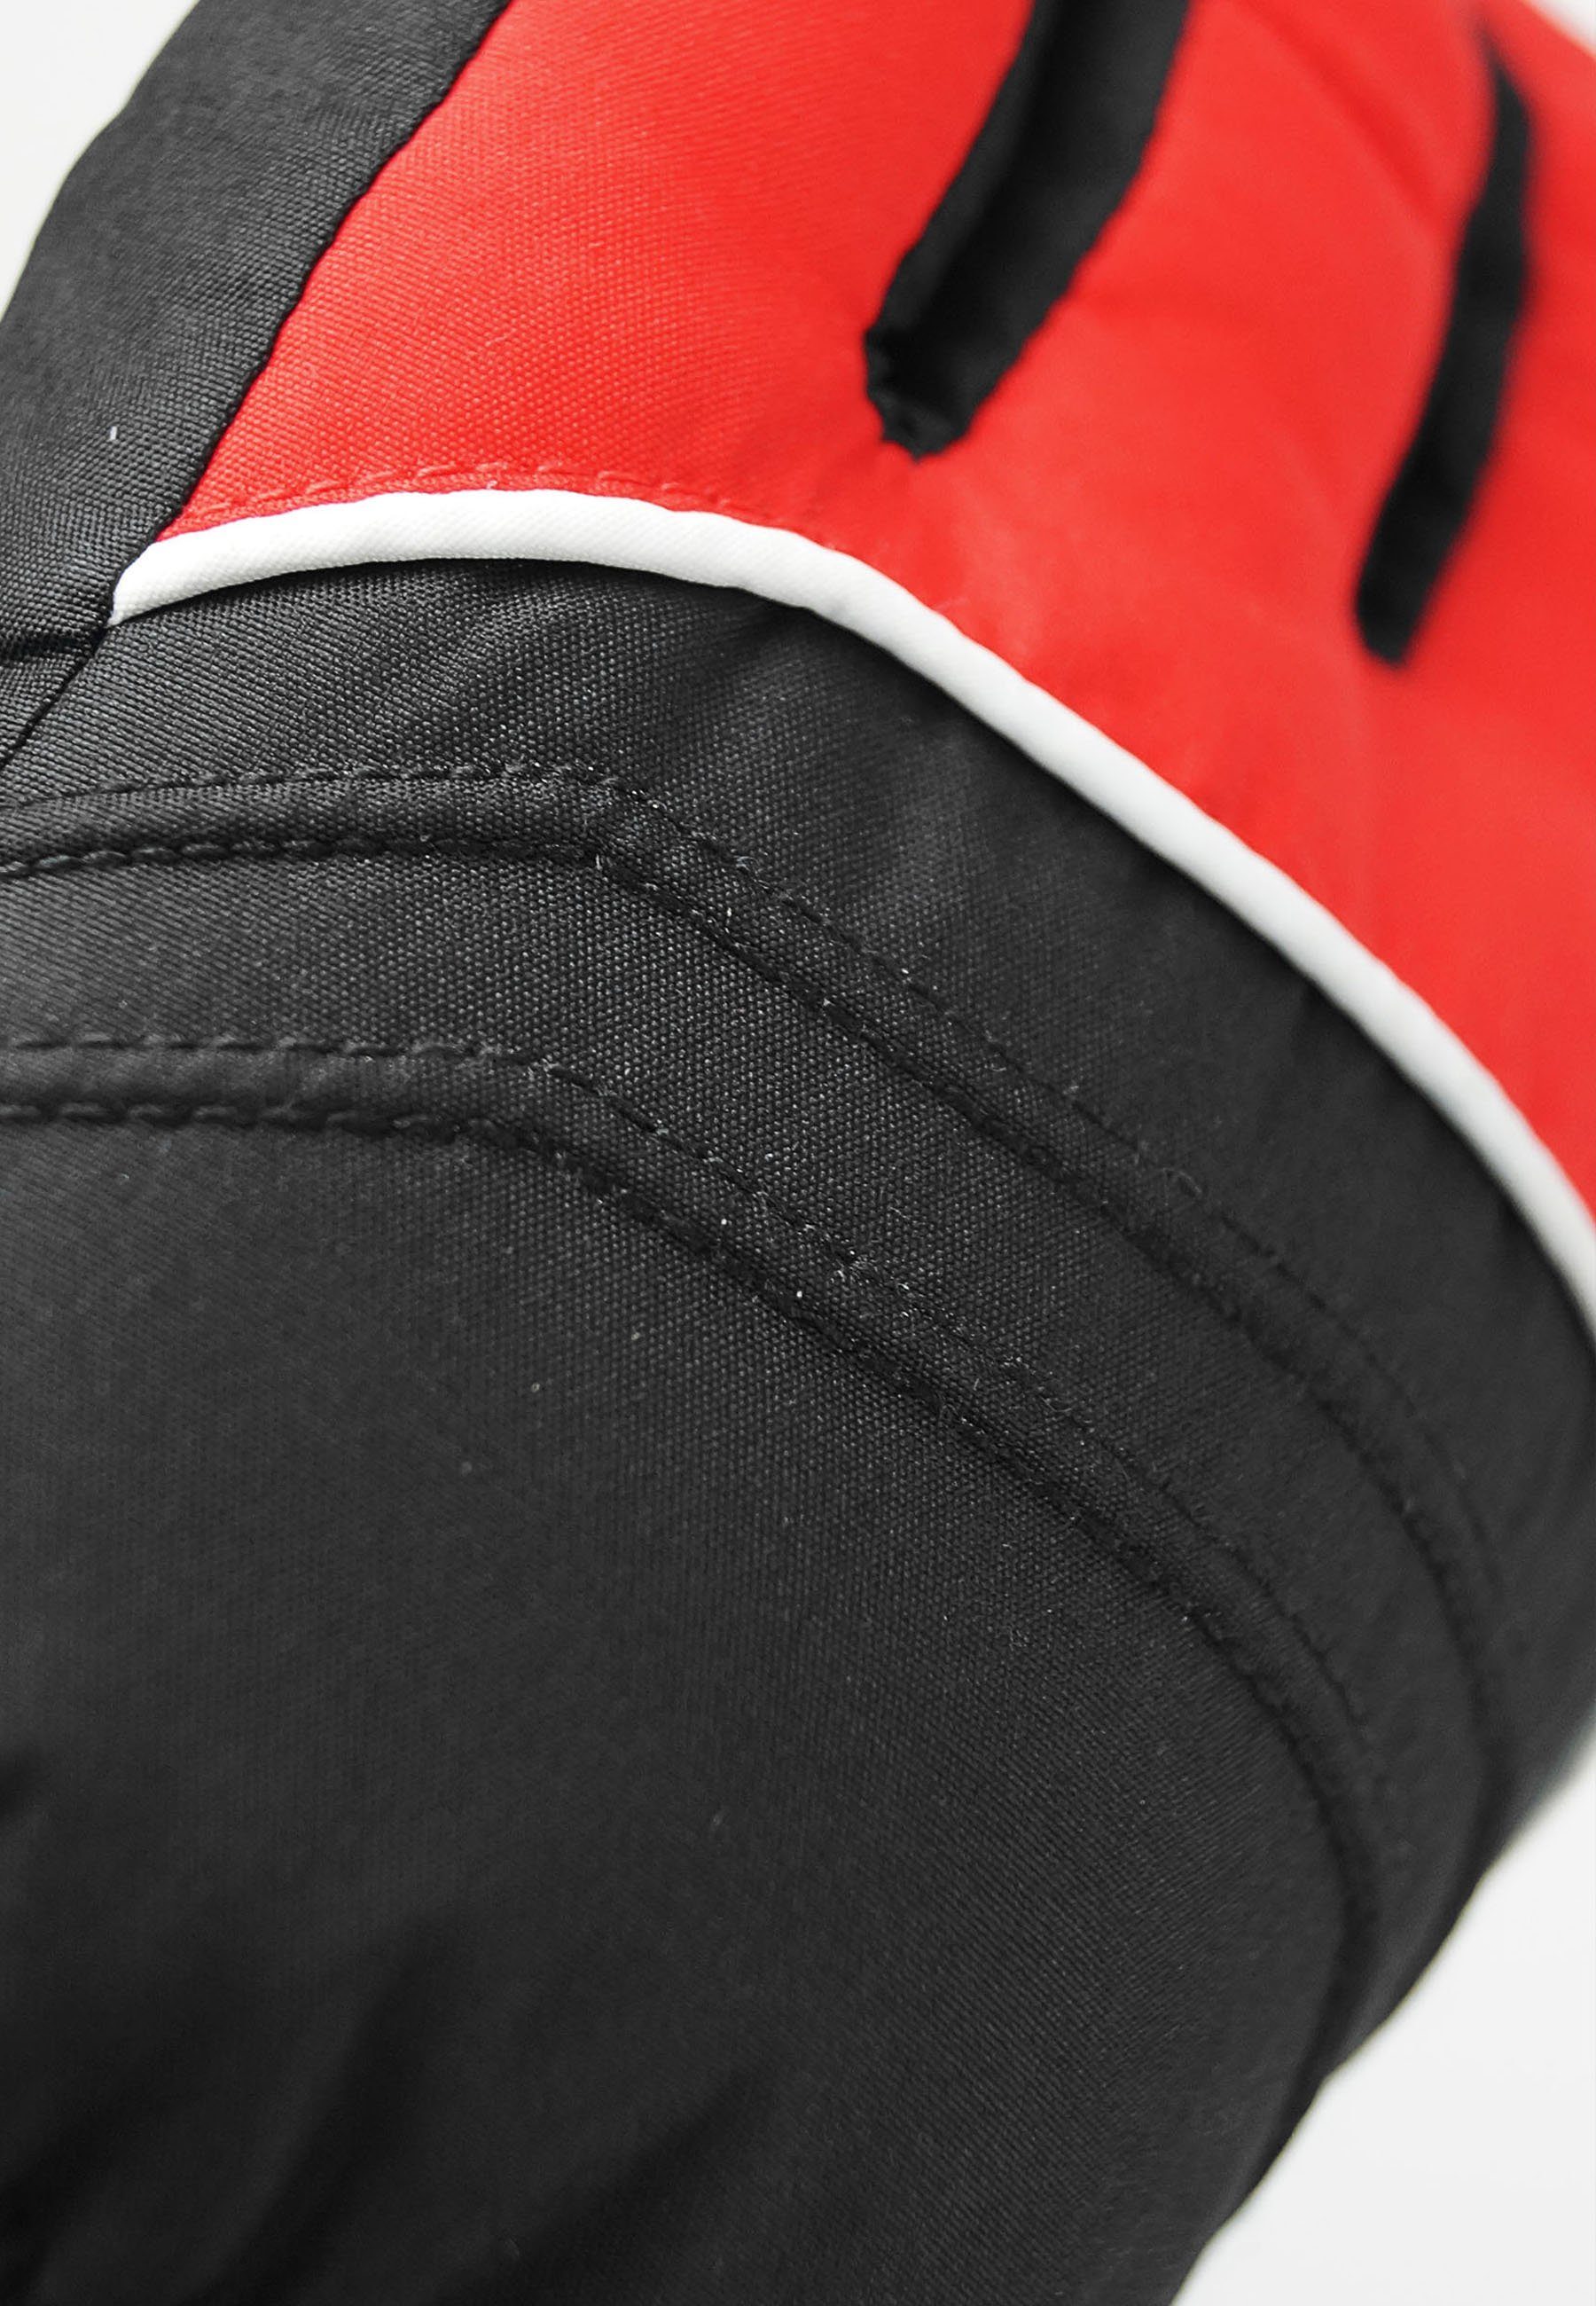 Reusch Skihandschuhe Teddy GORE-TEX mit rot-schwarz wasserdichter Funktionsmembran